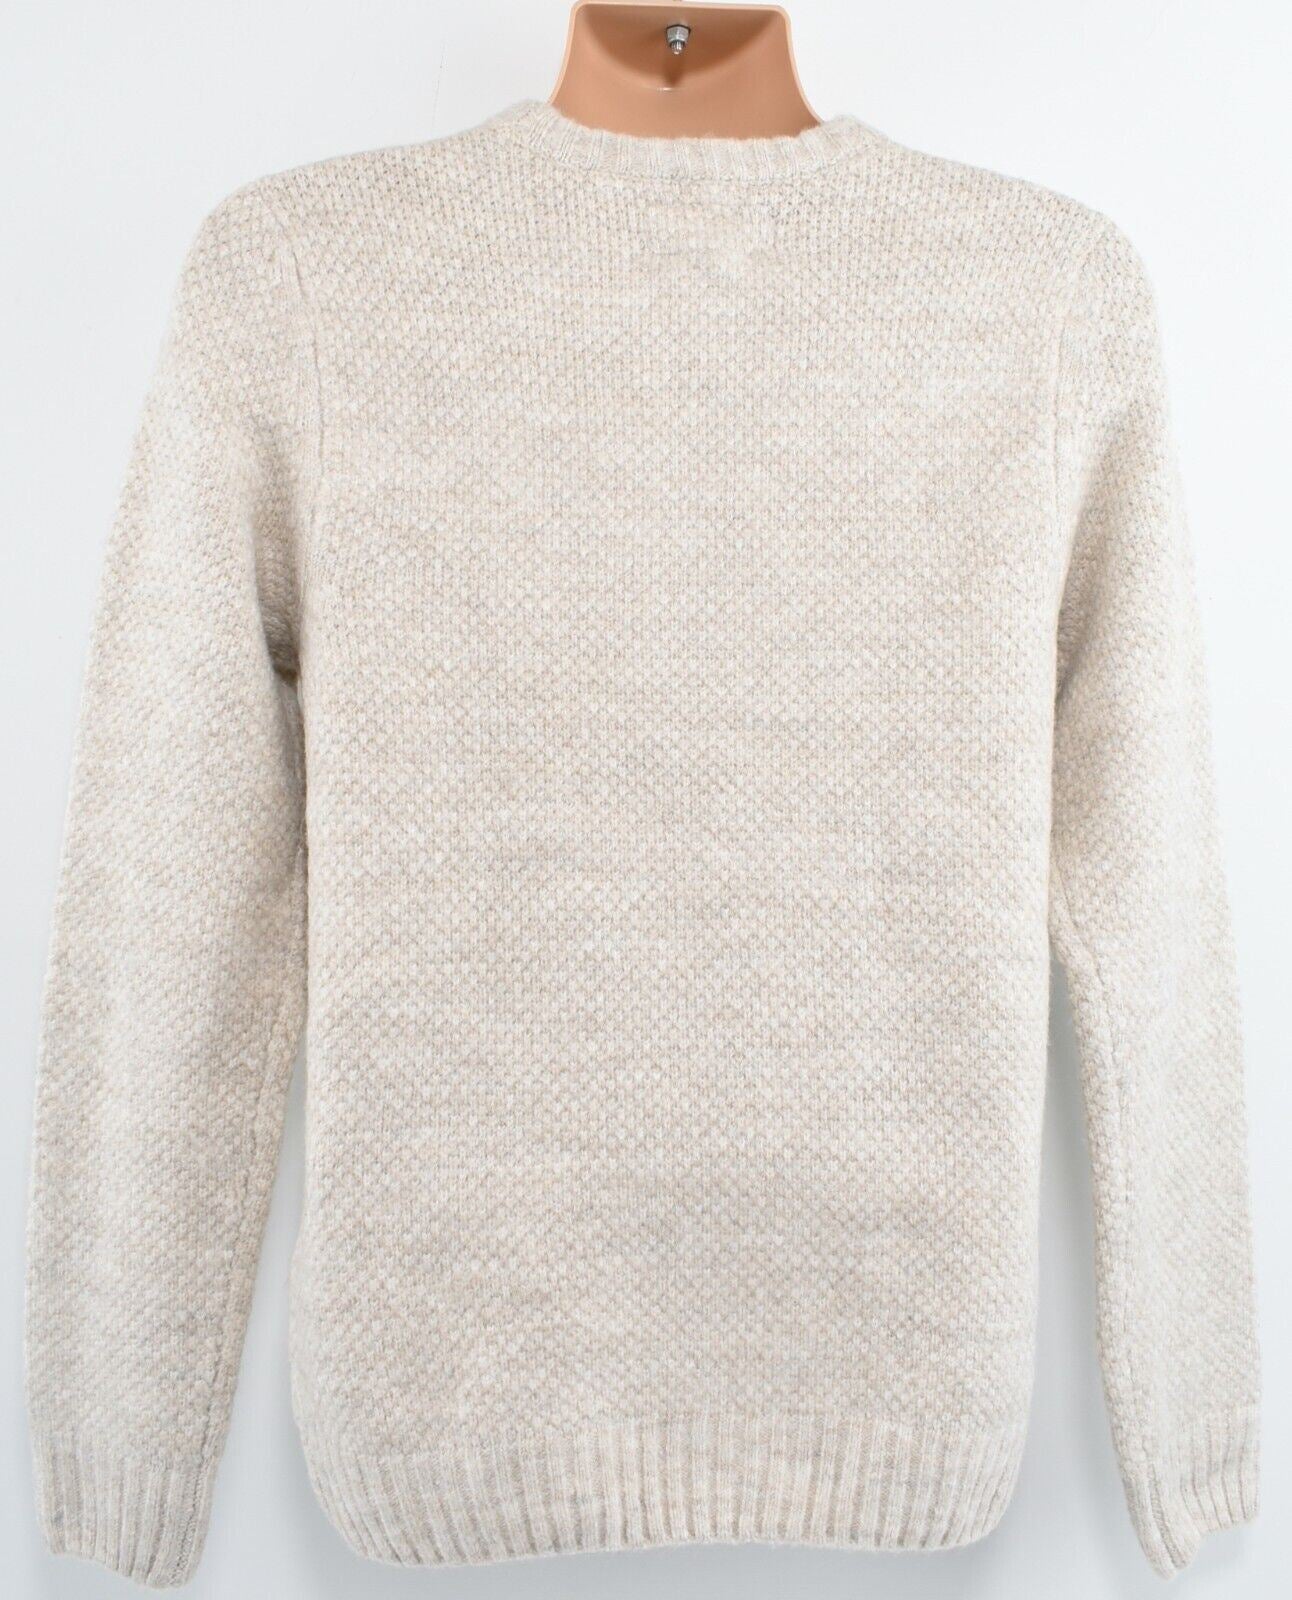 FIRETRAP Men's Texture Knit Jumper /Sweater, Beige, size SMALL